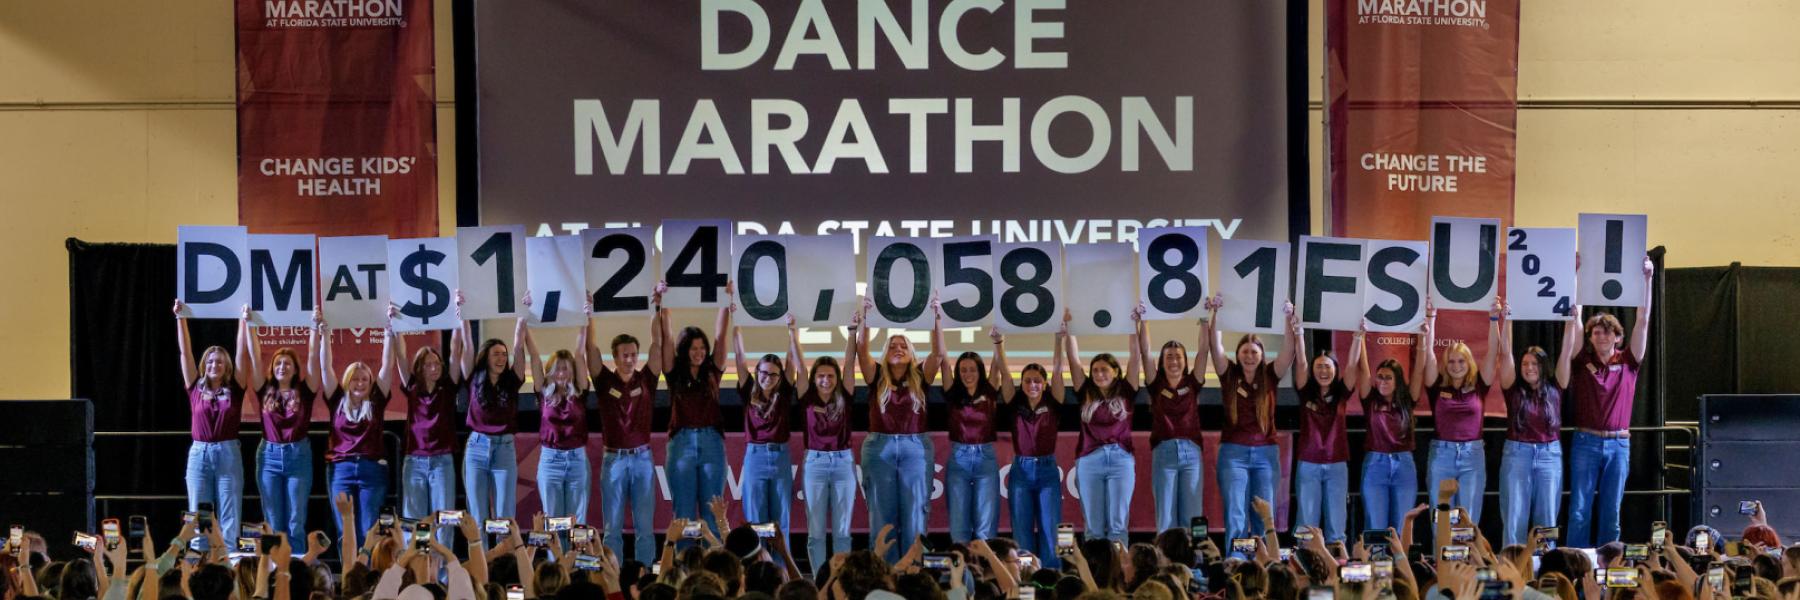 The "reveal" showed the 2024 Dance Marathon at FSU raised more than $1.24 million.